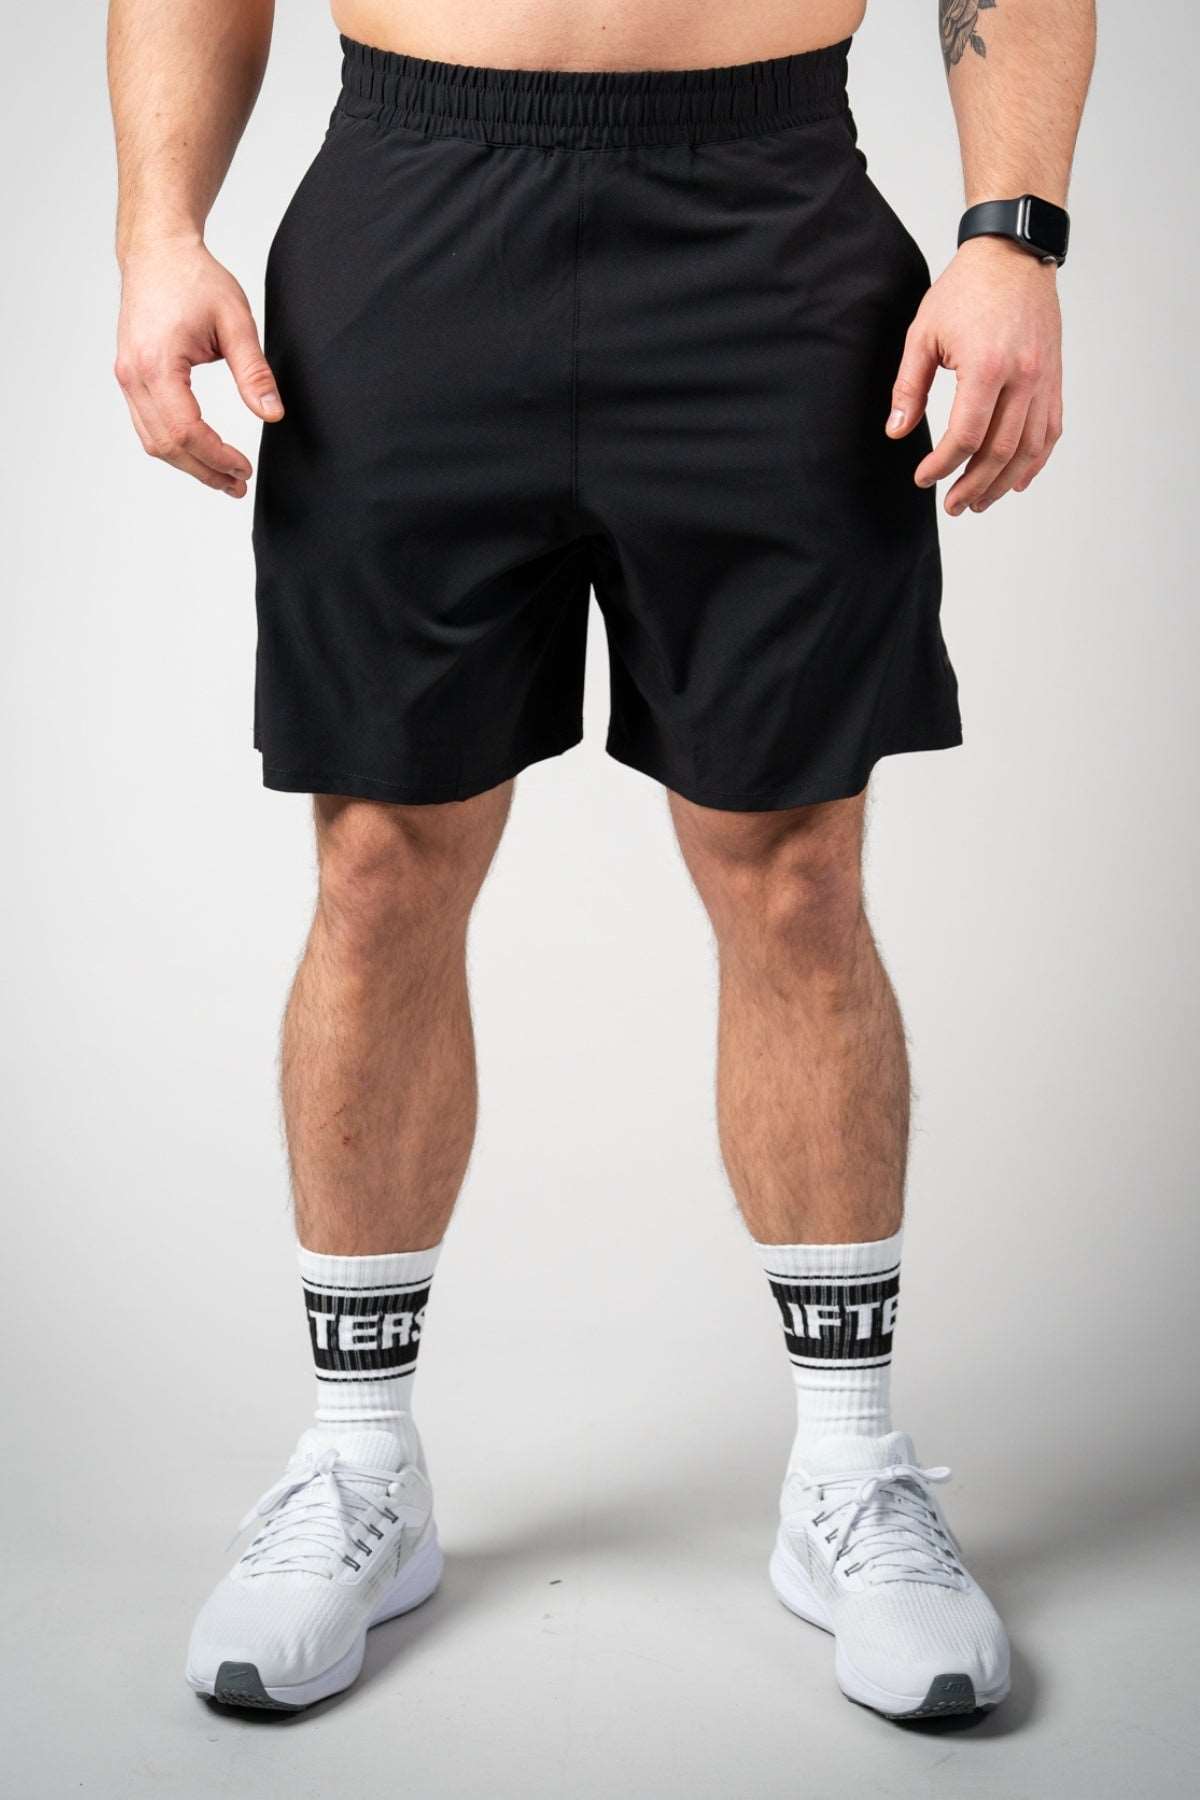 Lifters Raw Shorts - Long Cut Lifters Wear 